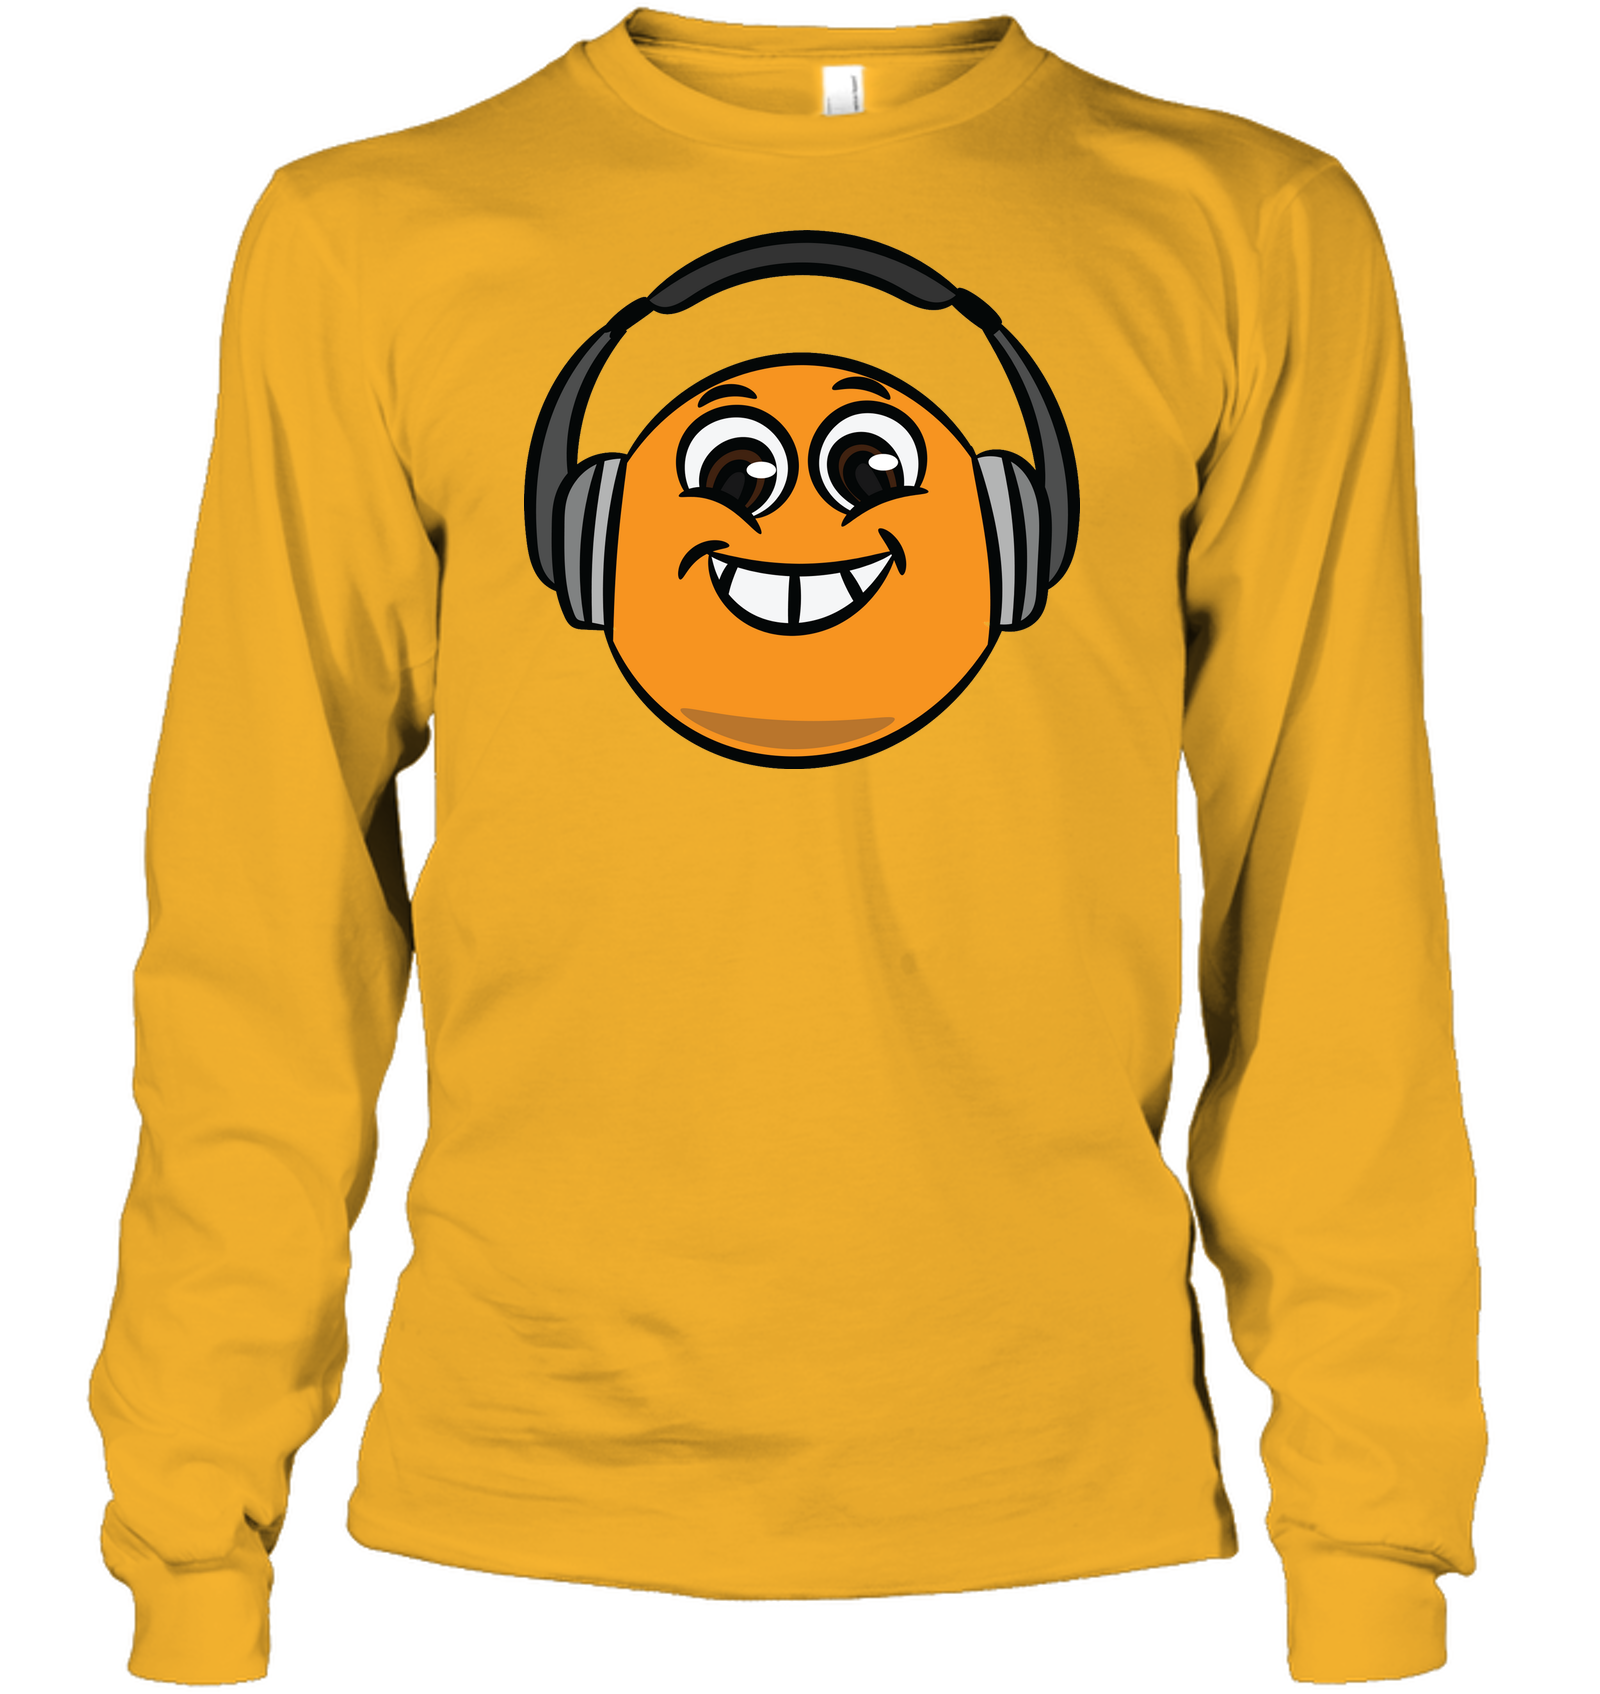 Eager Orange with Headphone - Gildan Adult Classic Long Sleeve T-Shirt